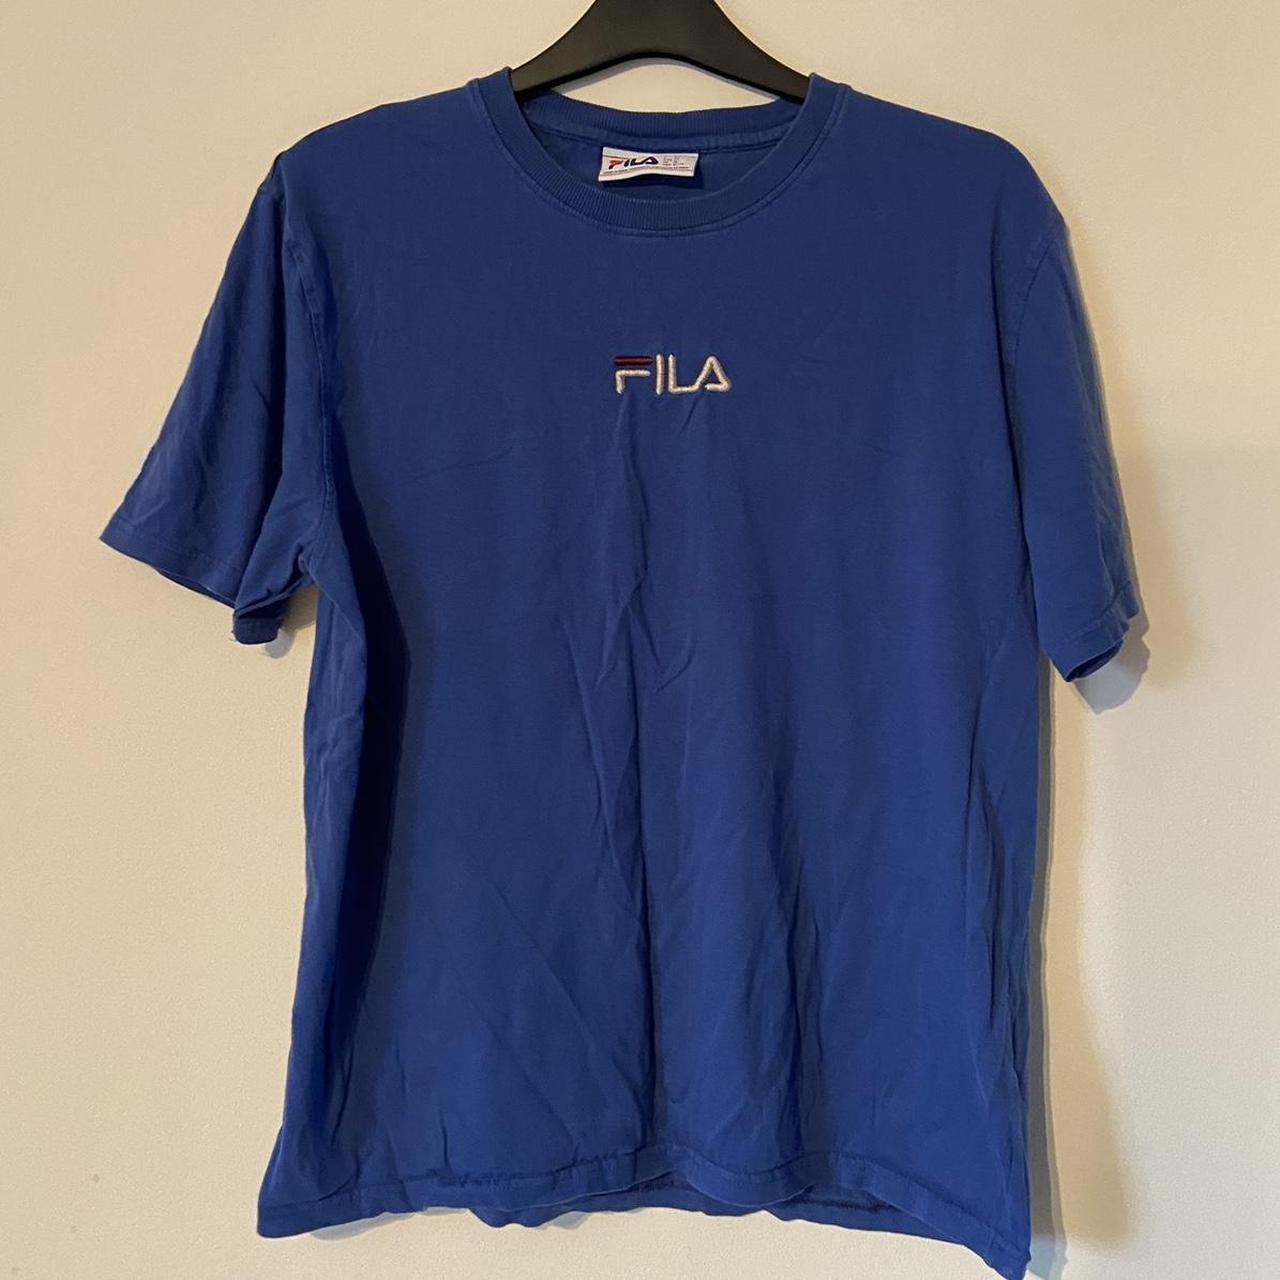 Fila Men's Blue and White T-shirt | Depop